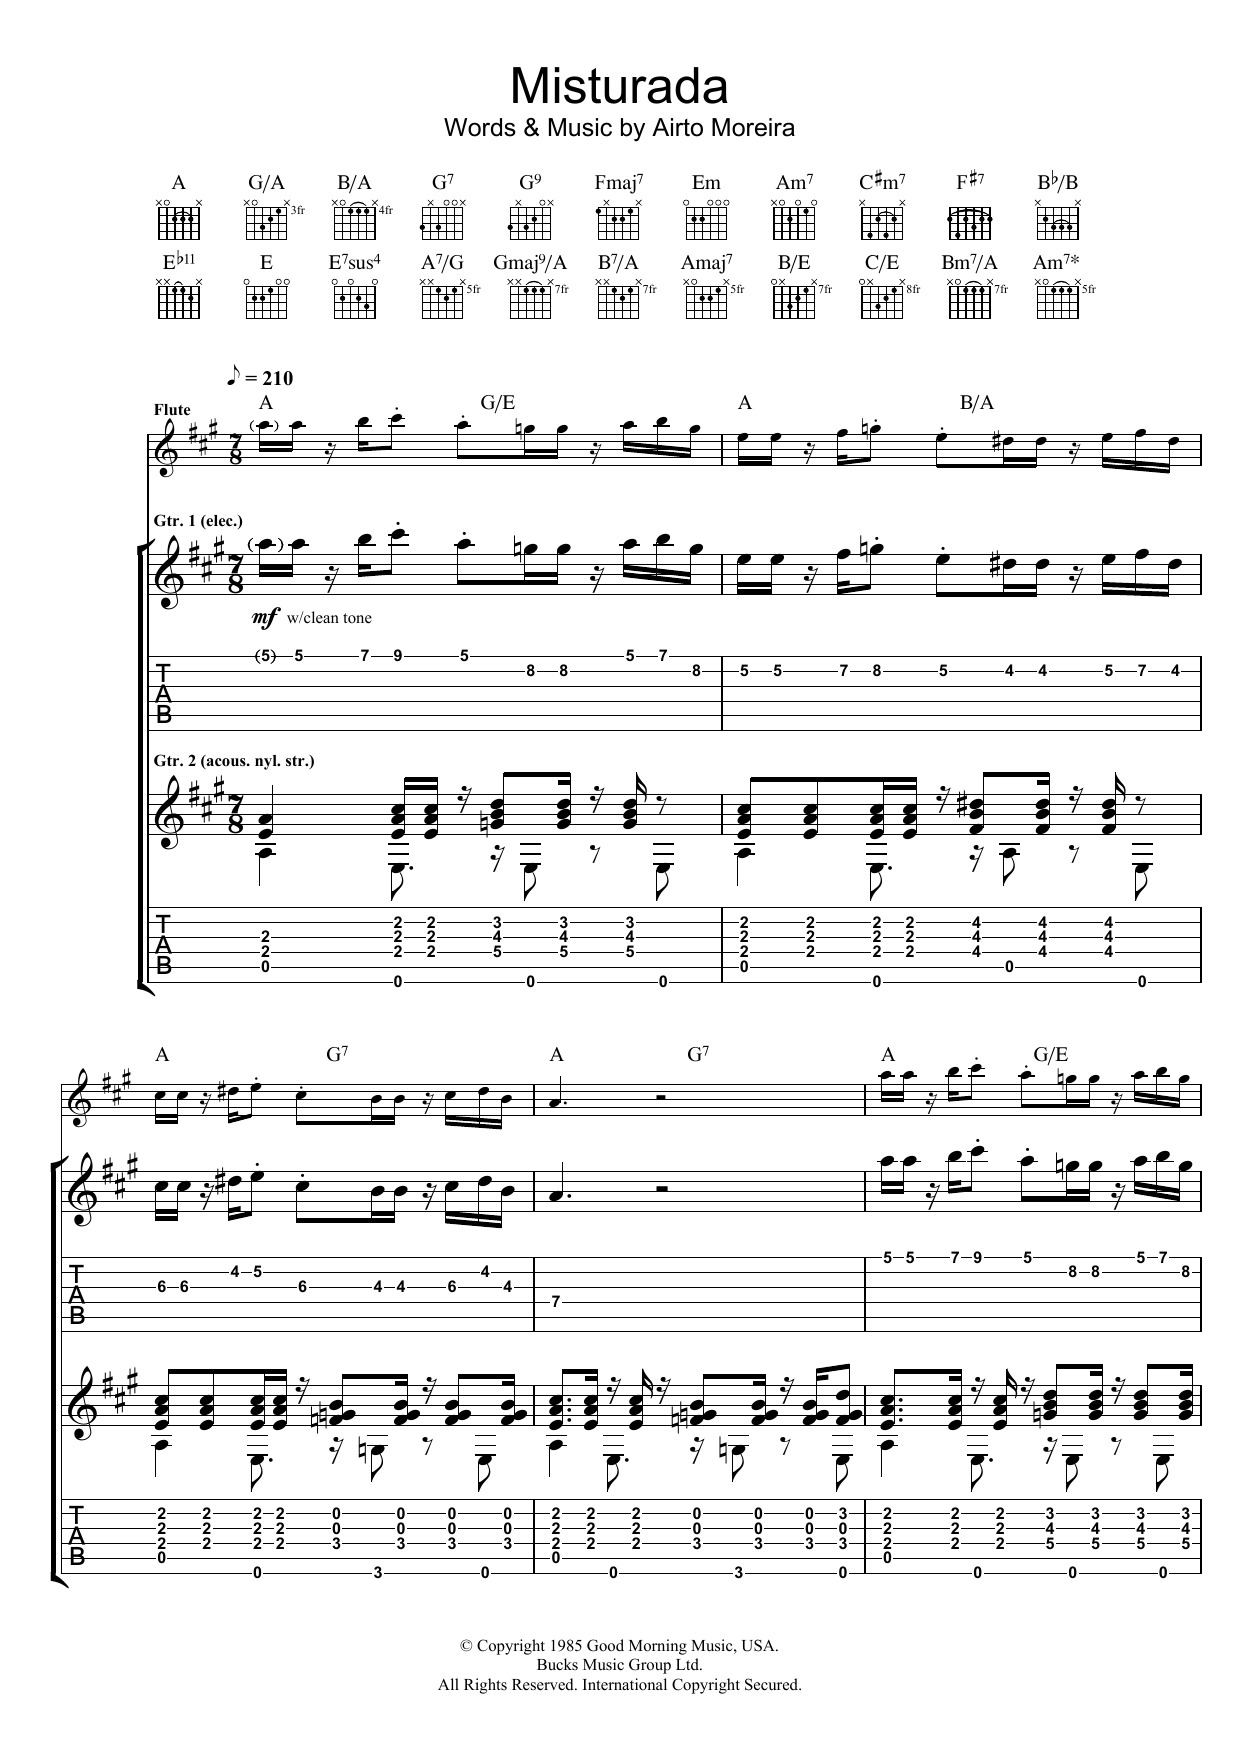 Airto Moreira Misturada Sheet Music Notes & Chords for Guitar Tab - Download or Print PDF